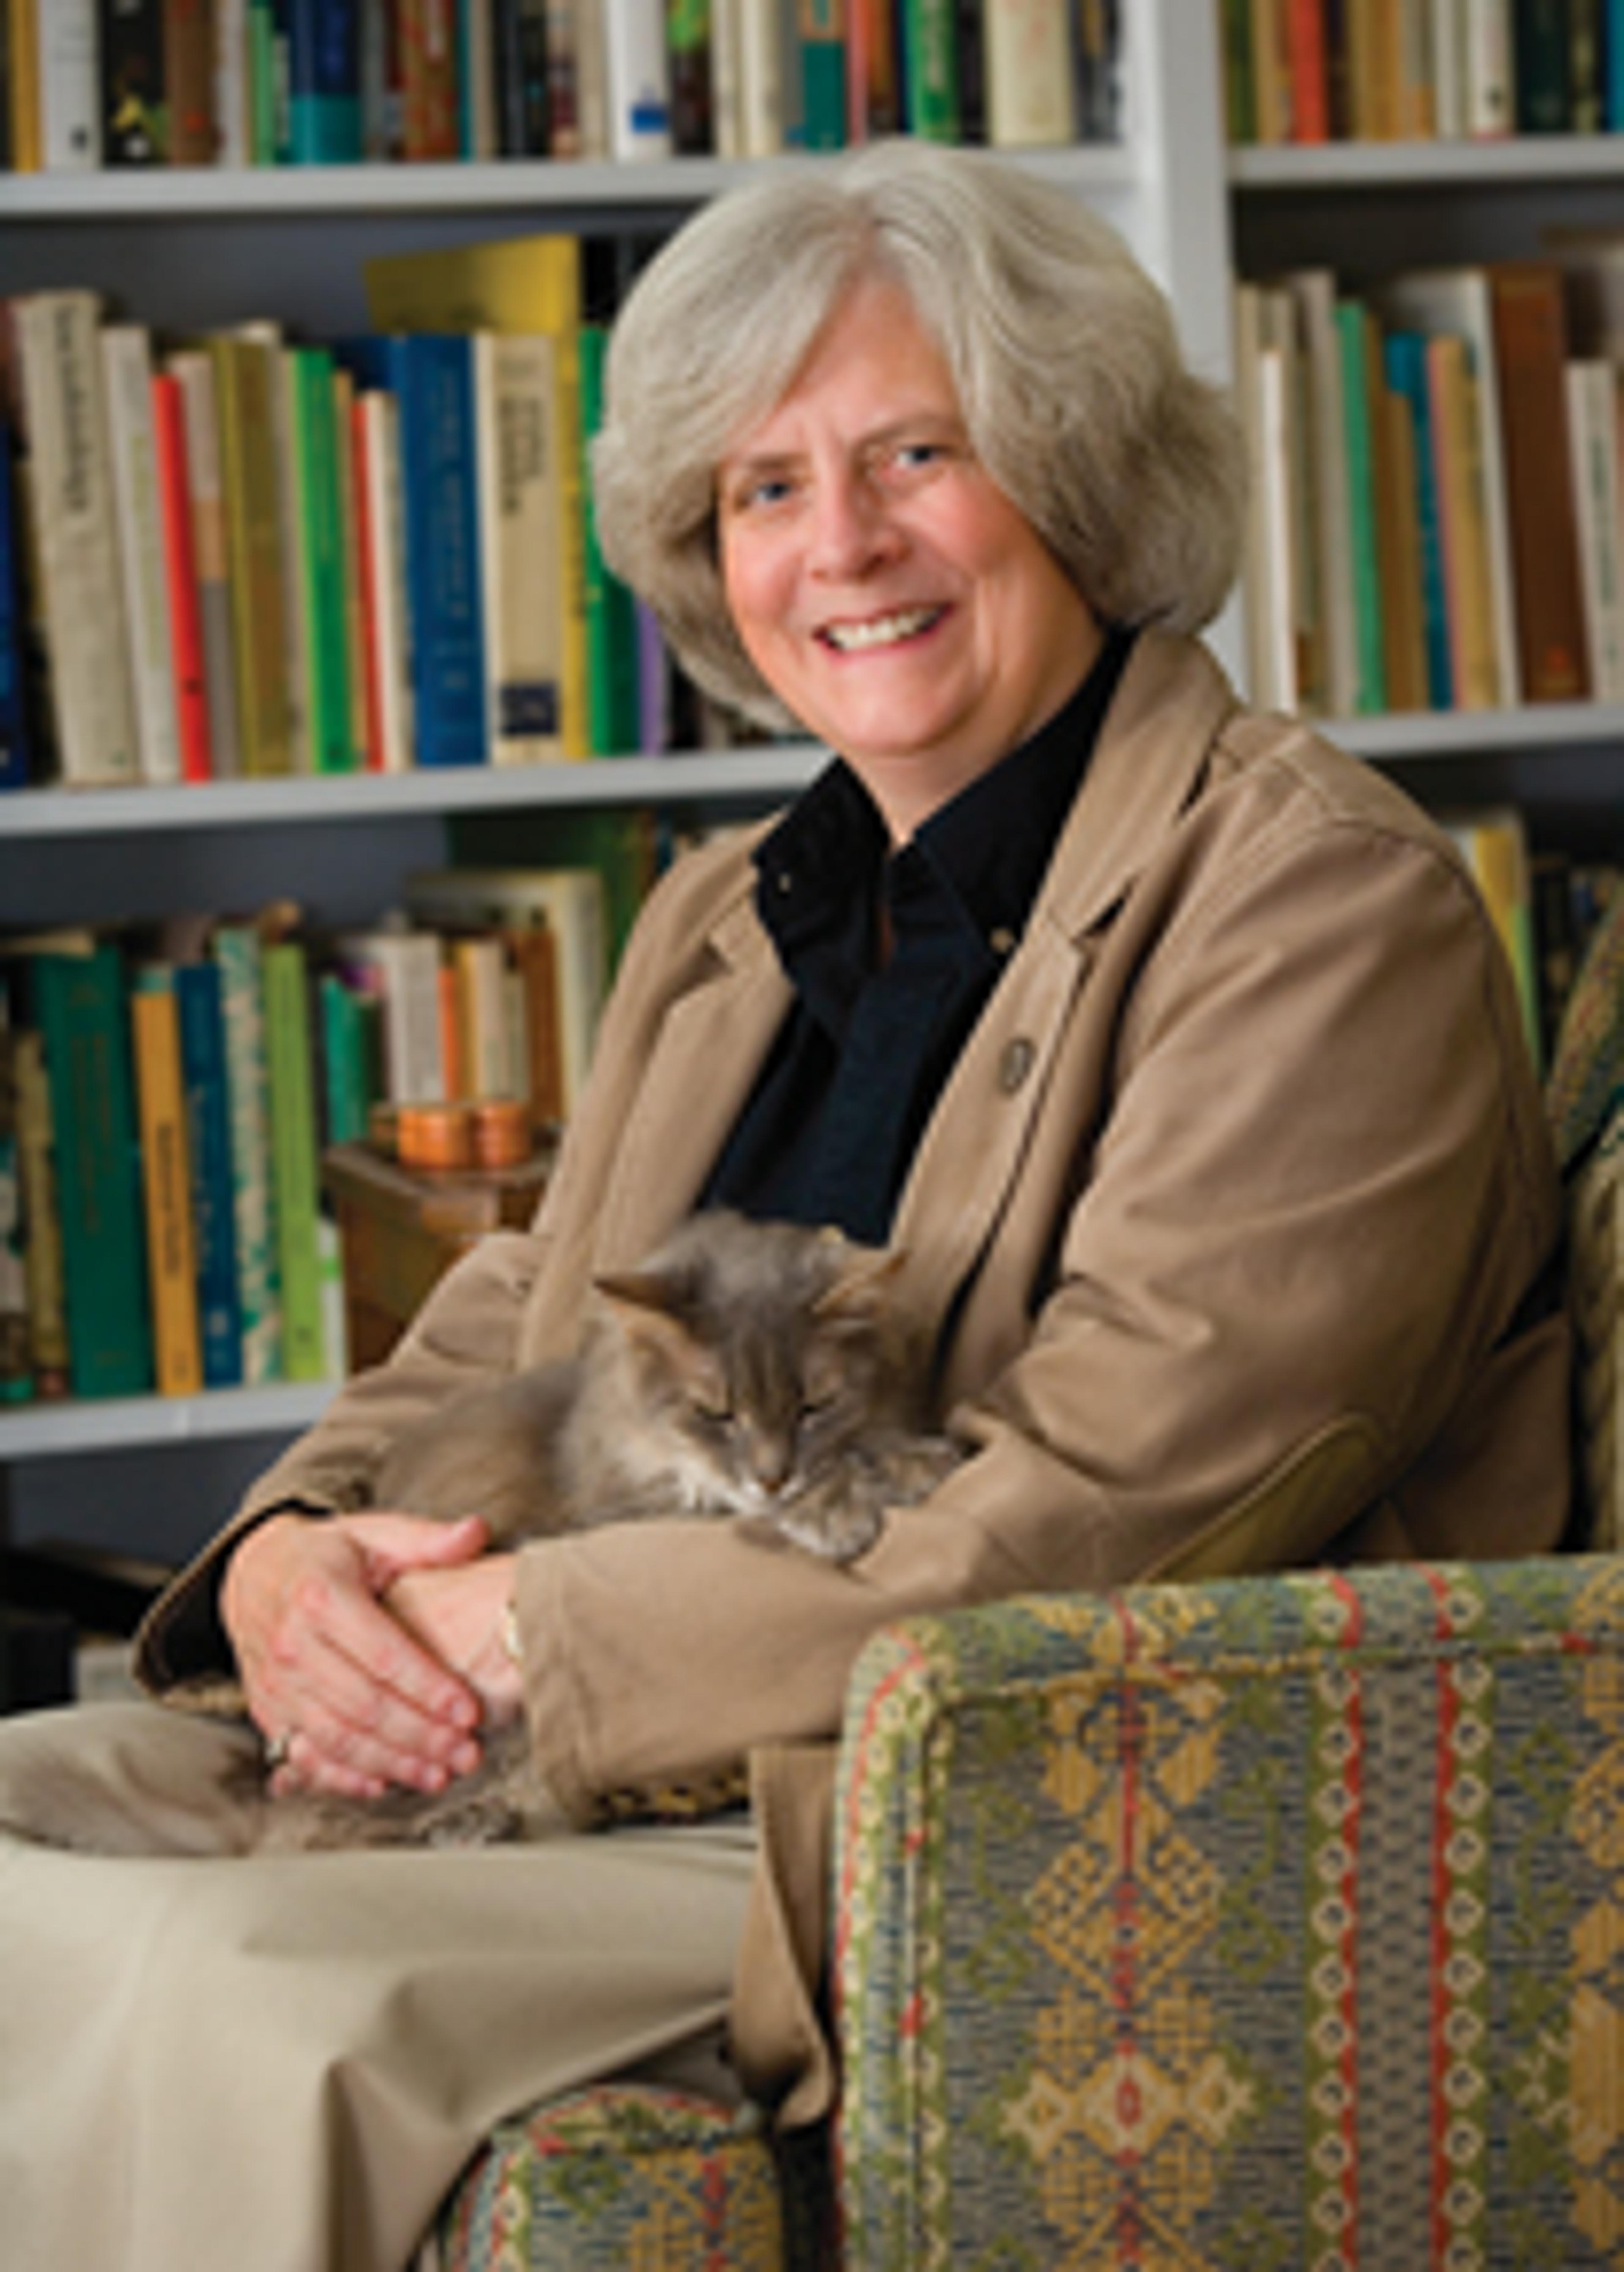 Susan Reigler with her cat